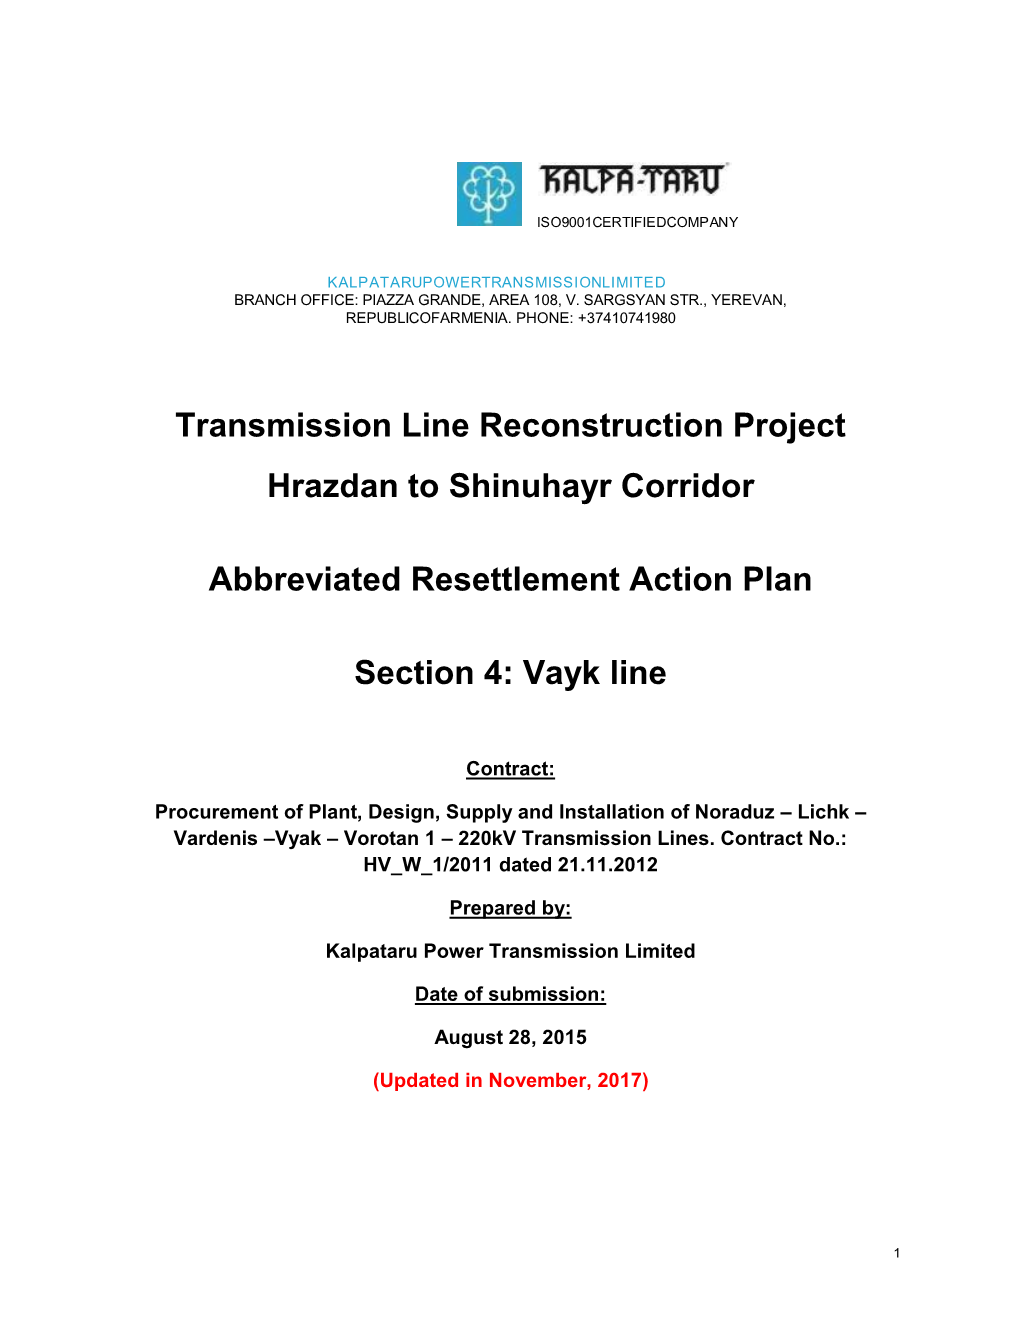 Transmission Line Reconstruction Project Hrazdan to Shinuhayr Corridor Abbreviated Resettlement Action Plan Section 4: Vayk Line